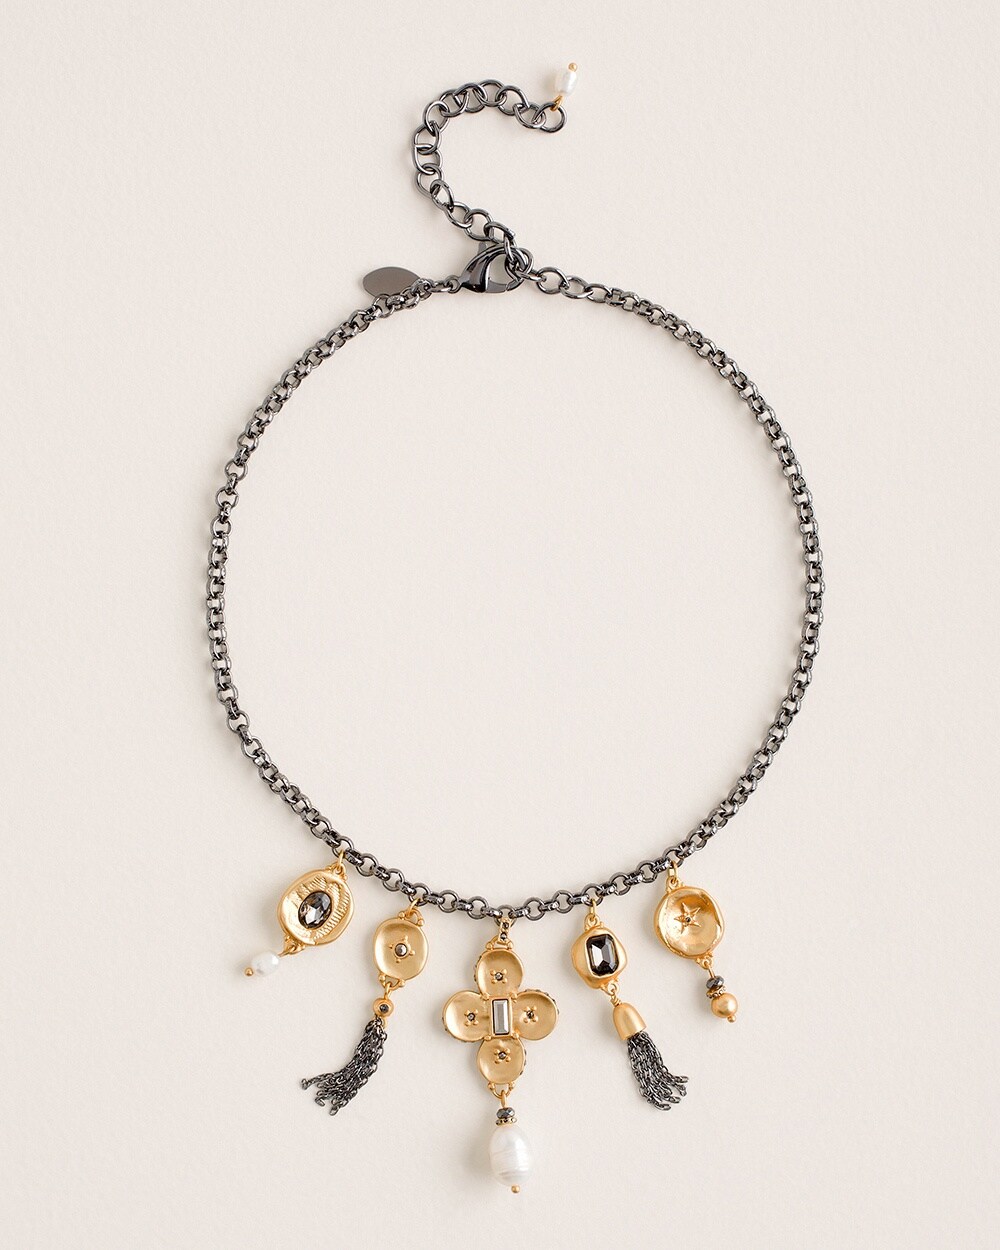 Short Black and Goldtone Charm Necklace